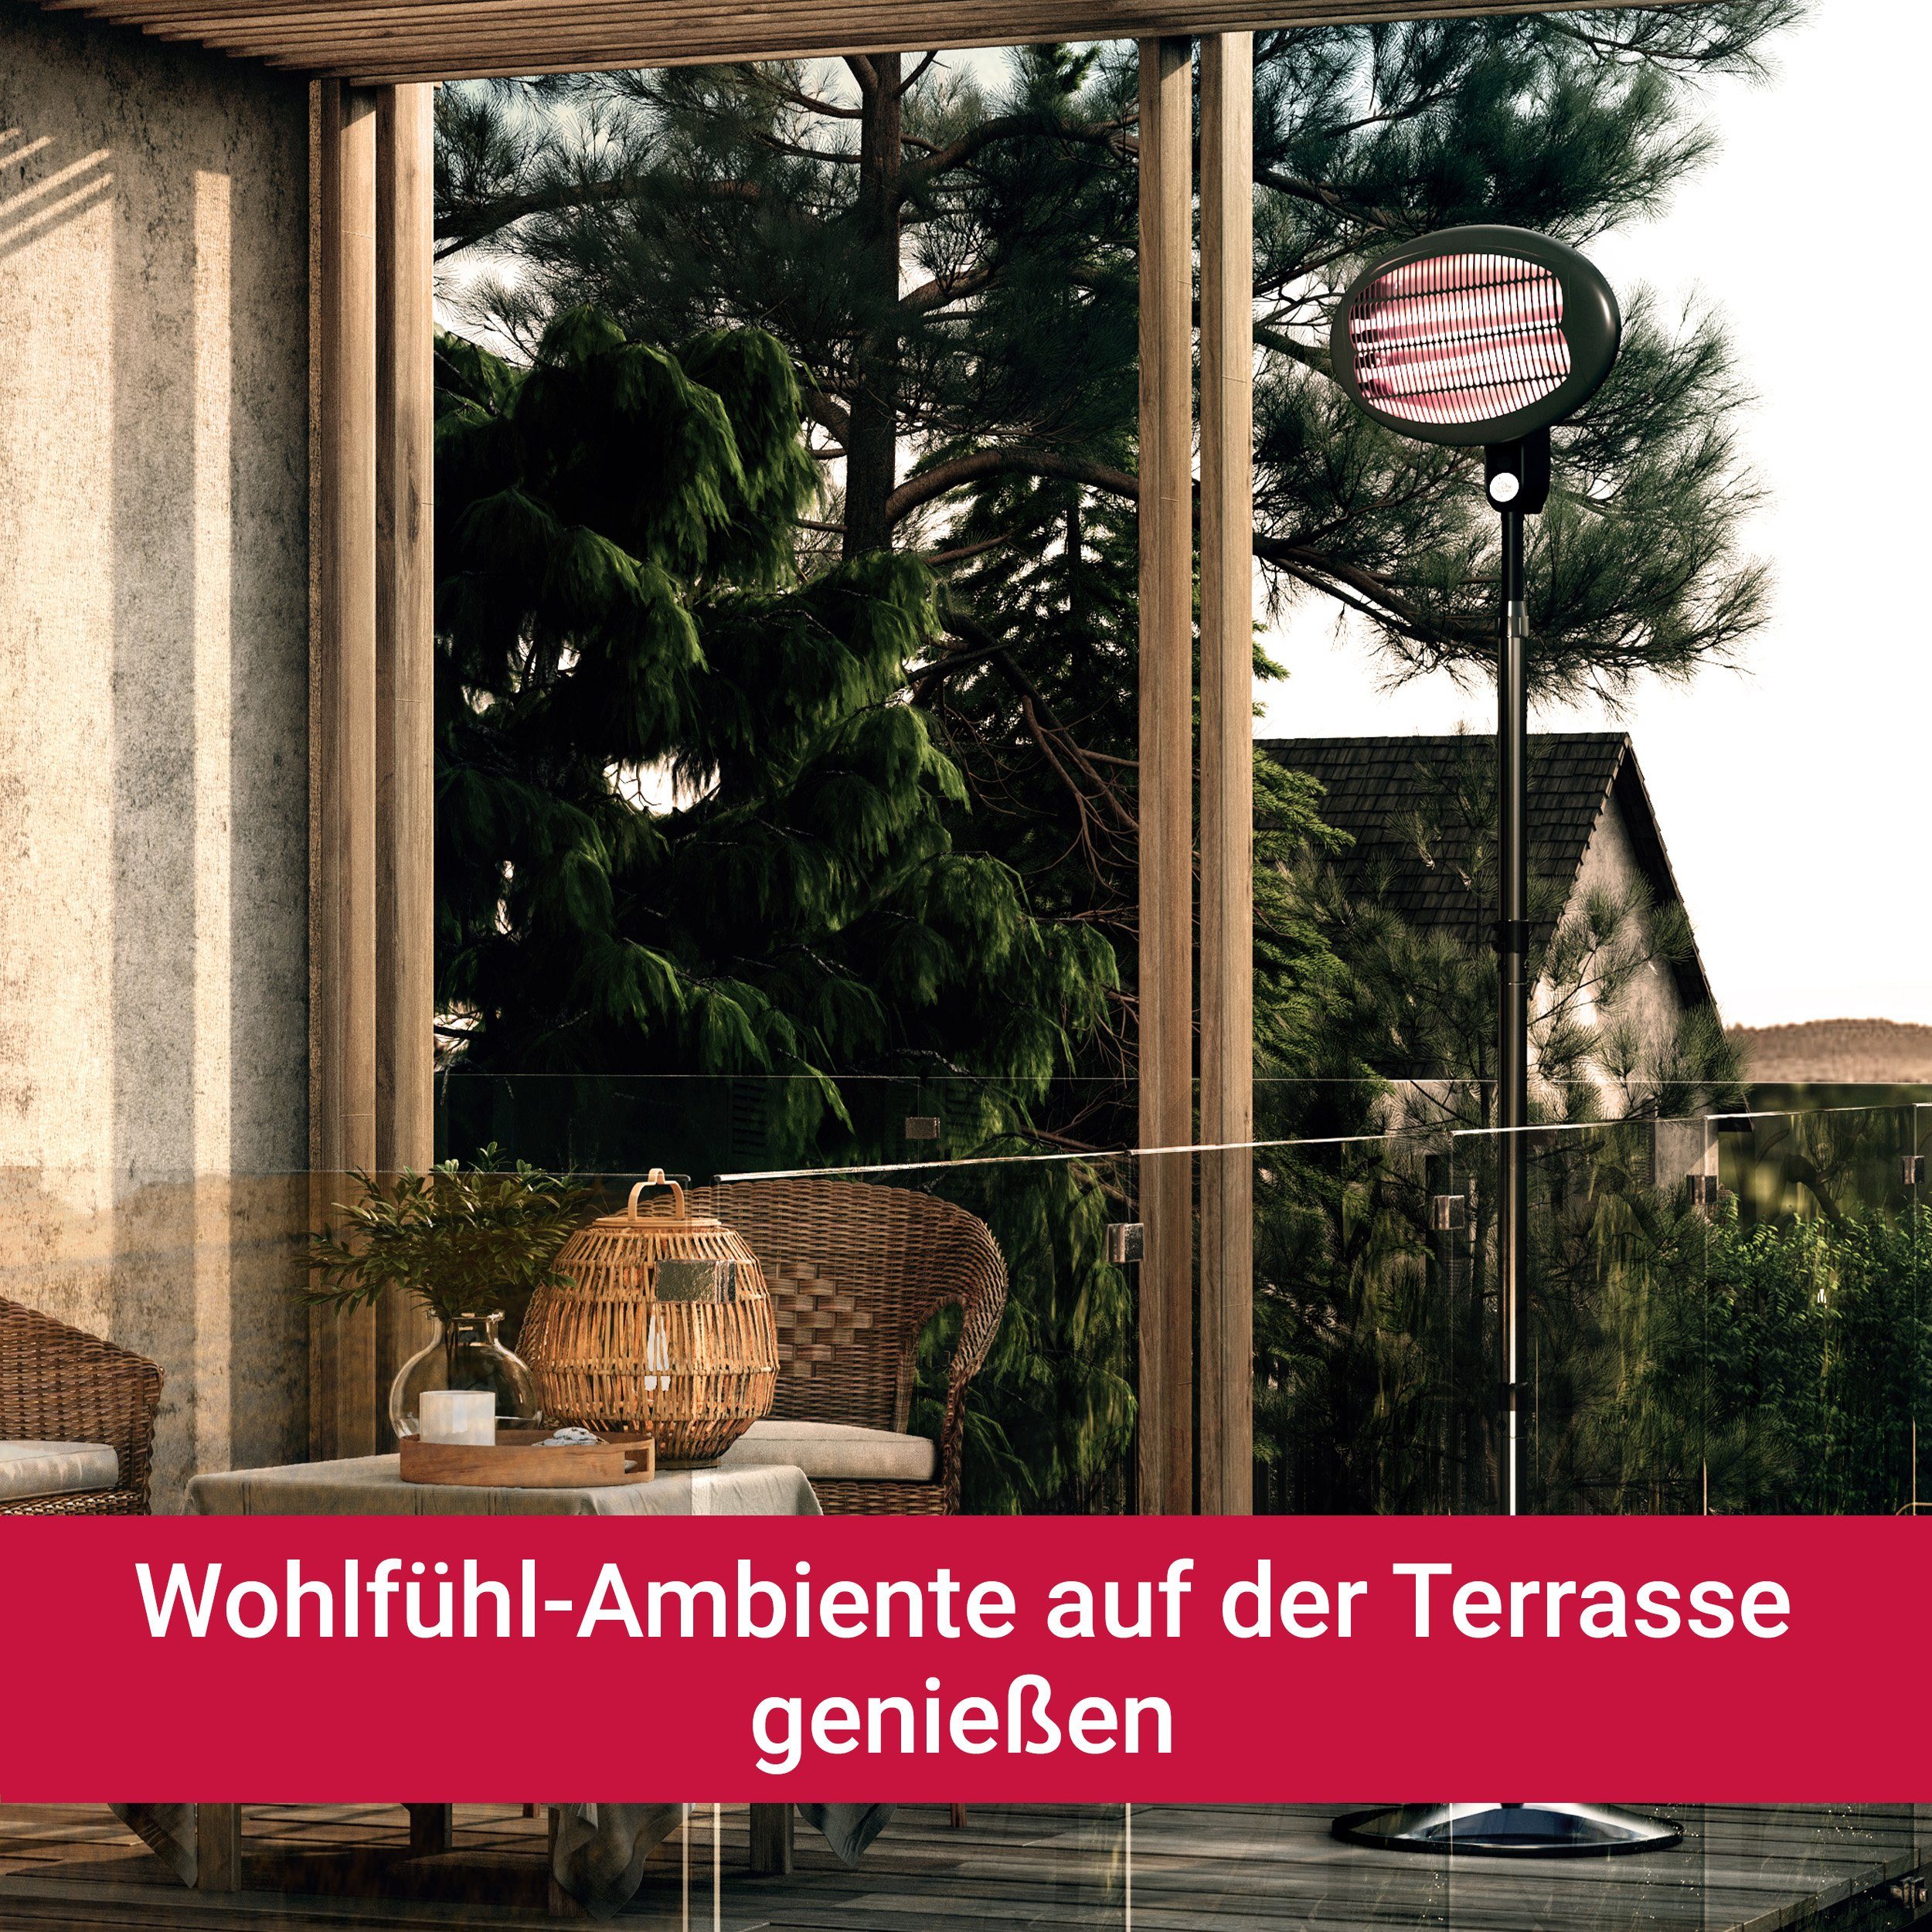 W, Heizstufen Terrassenheizer Infrarotstrahler inkl. Standfuß, Suntec Night Heizstrahler Wellness mit 2000 Sun, 3